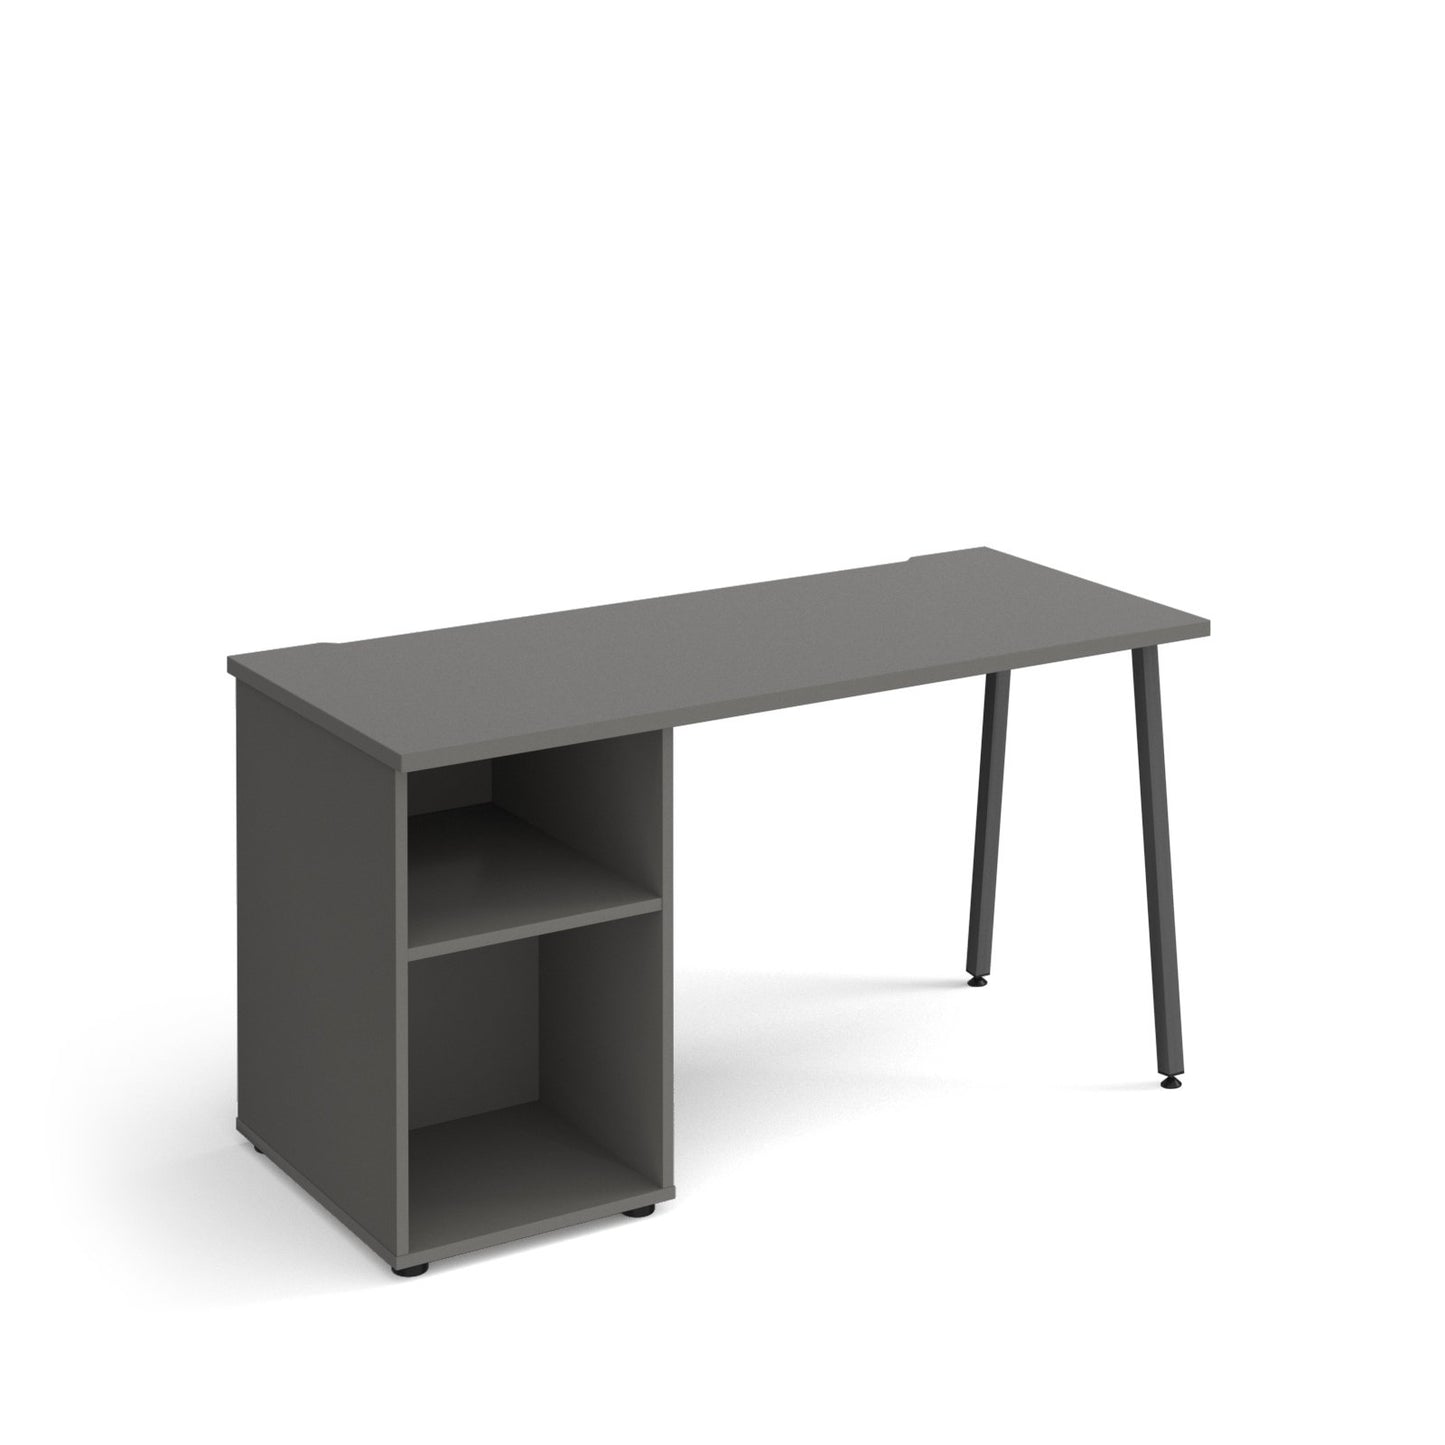 Sparta A-frame 600mm deep desk with support pedestal